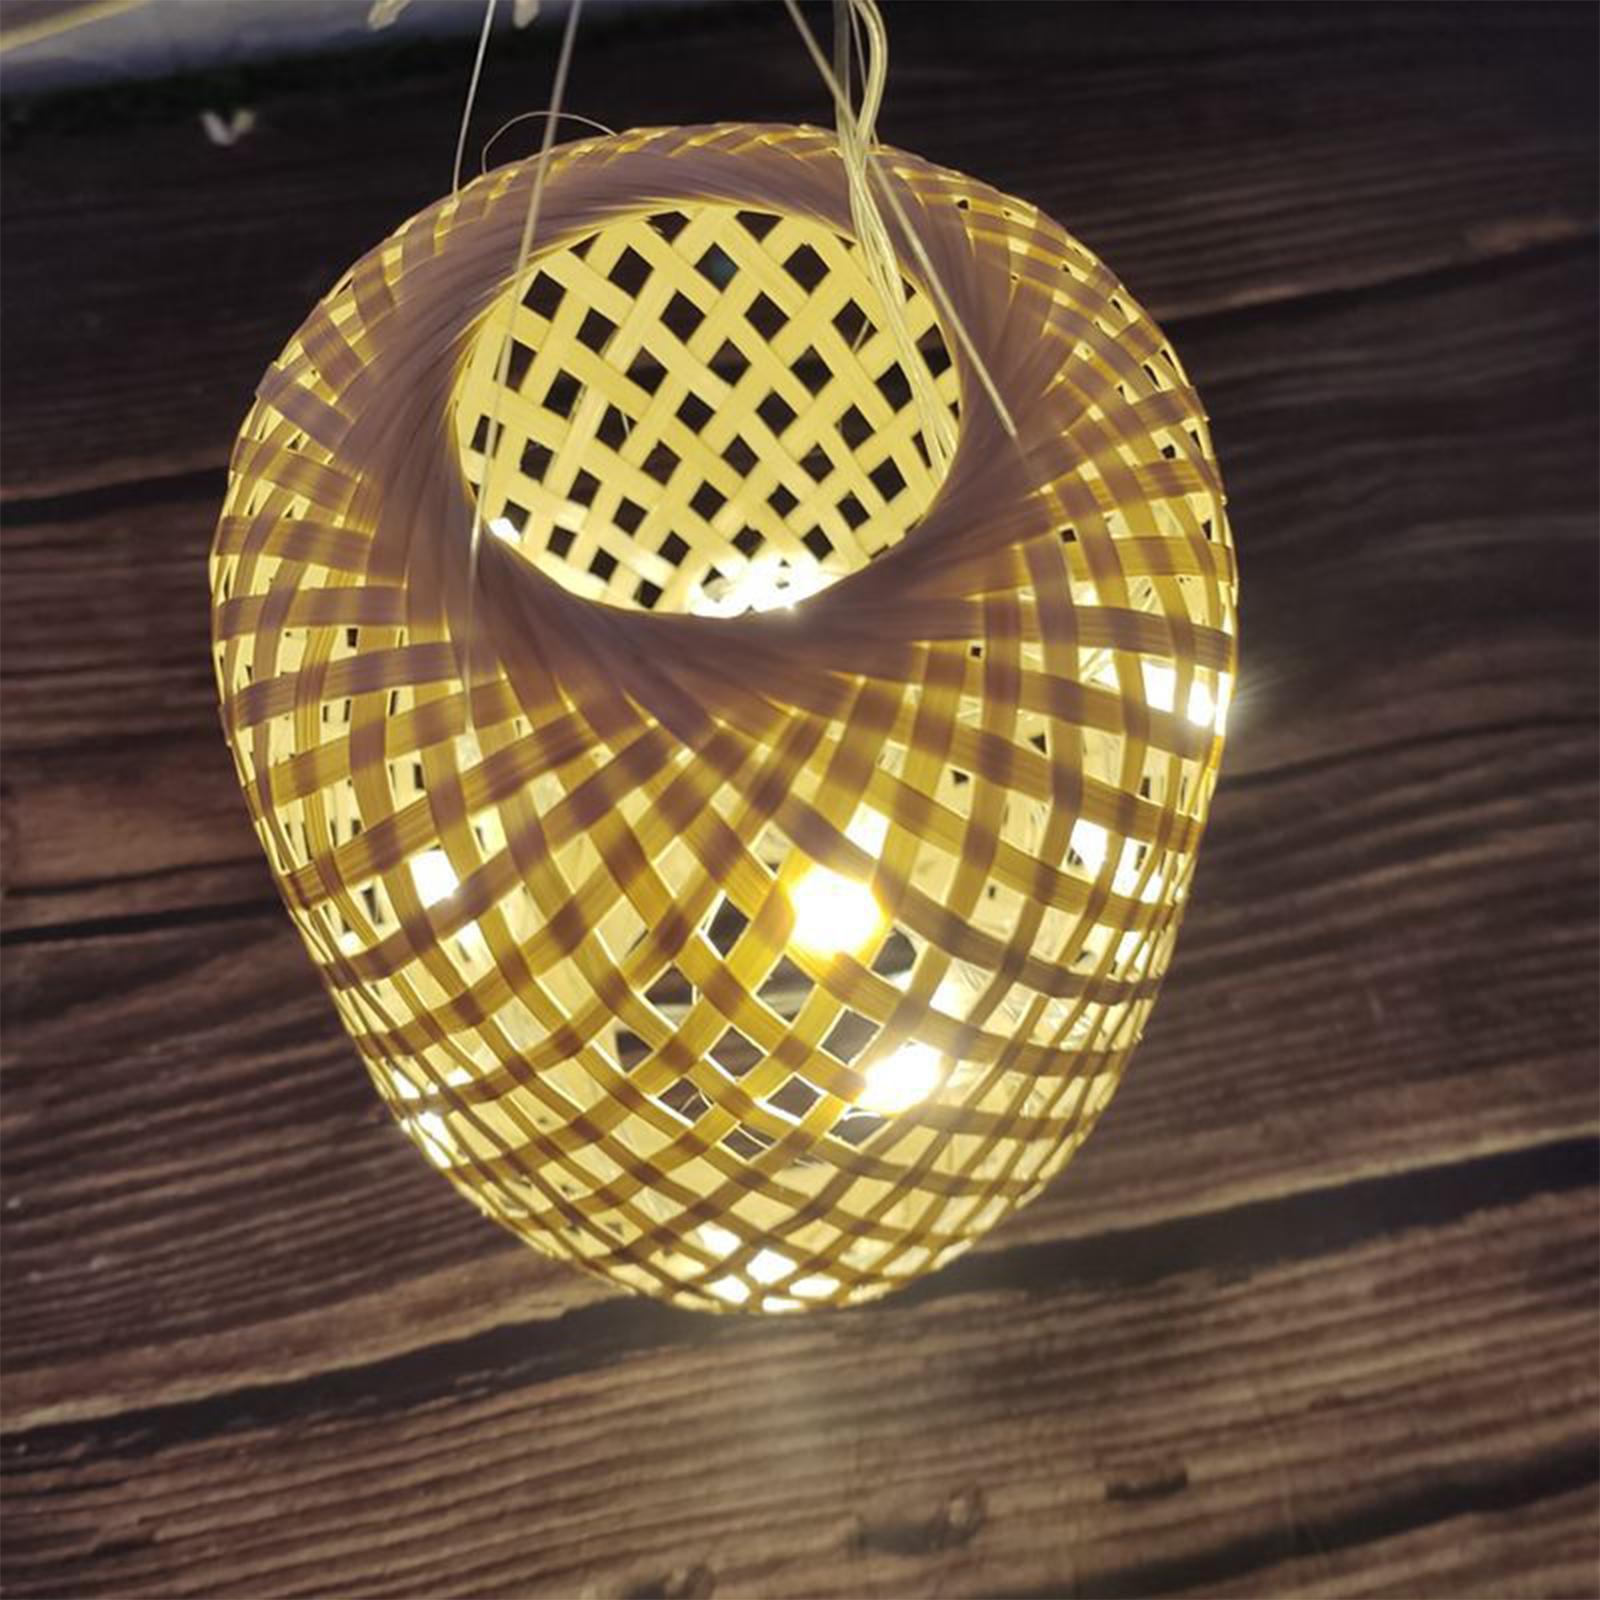 Bamboo Handwoven Lamp Shade Chandelier Light Cover for Living Room Cafe Bar